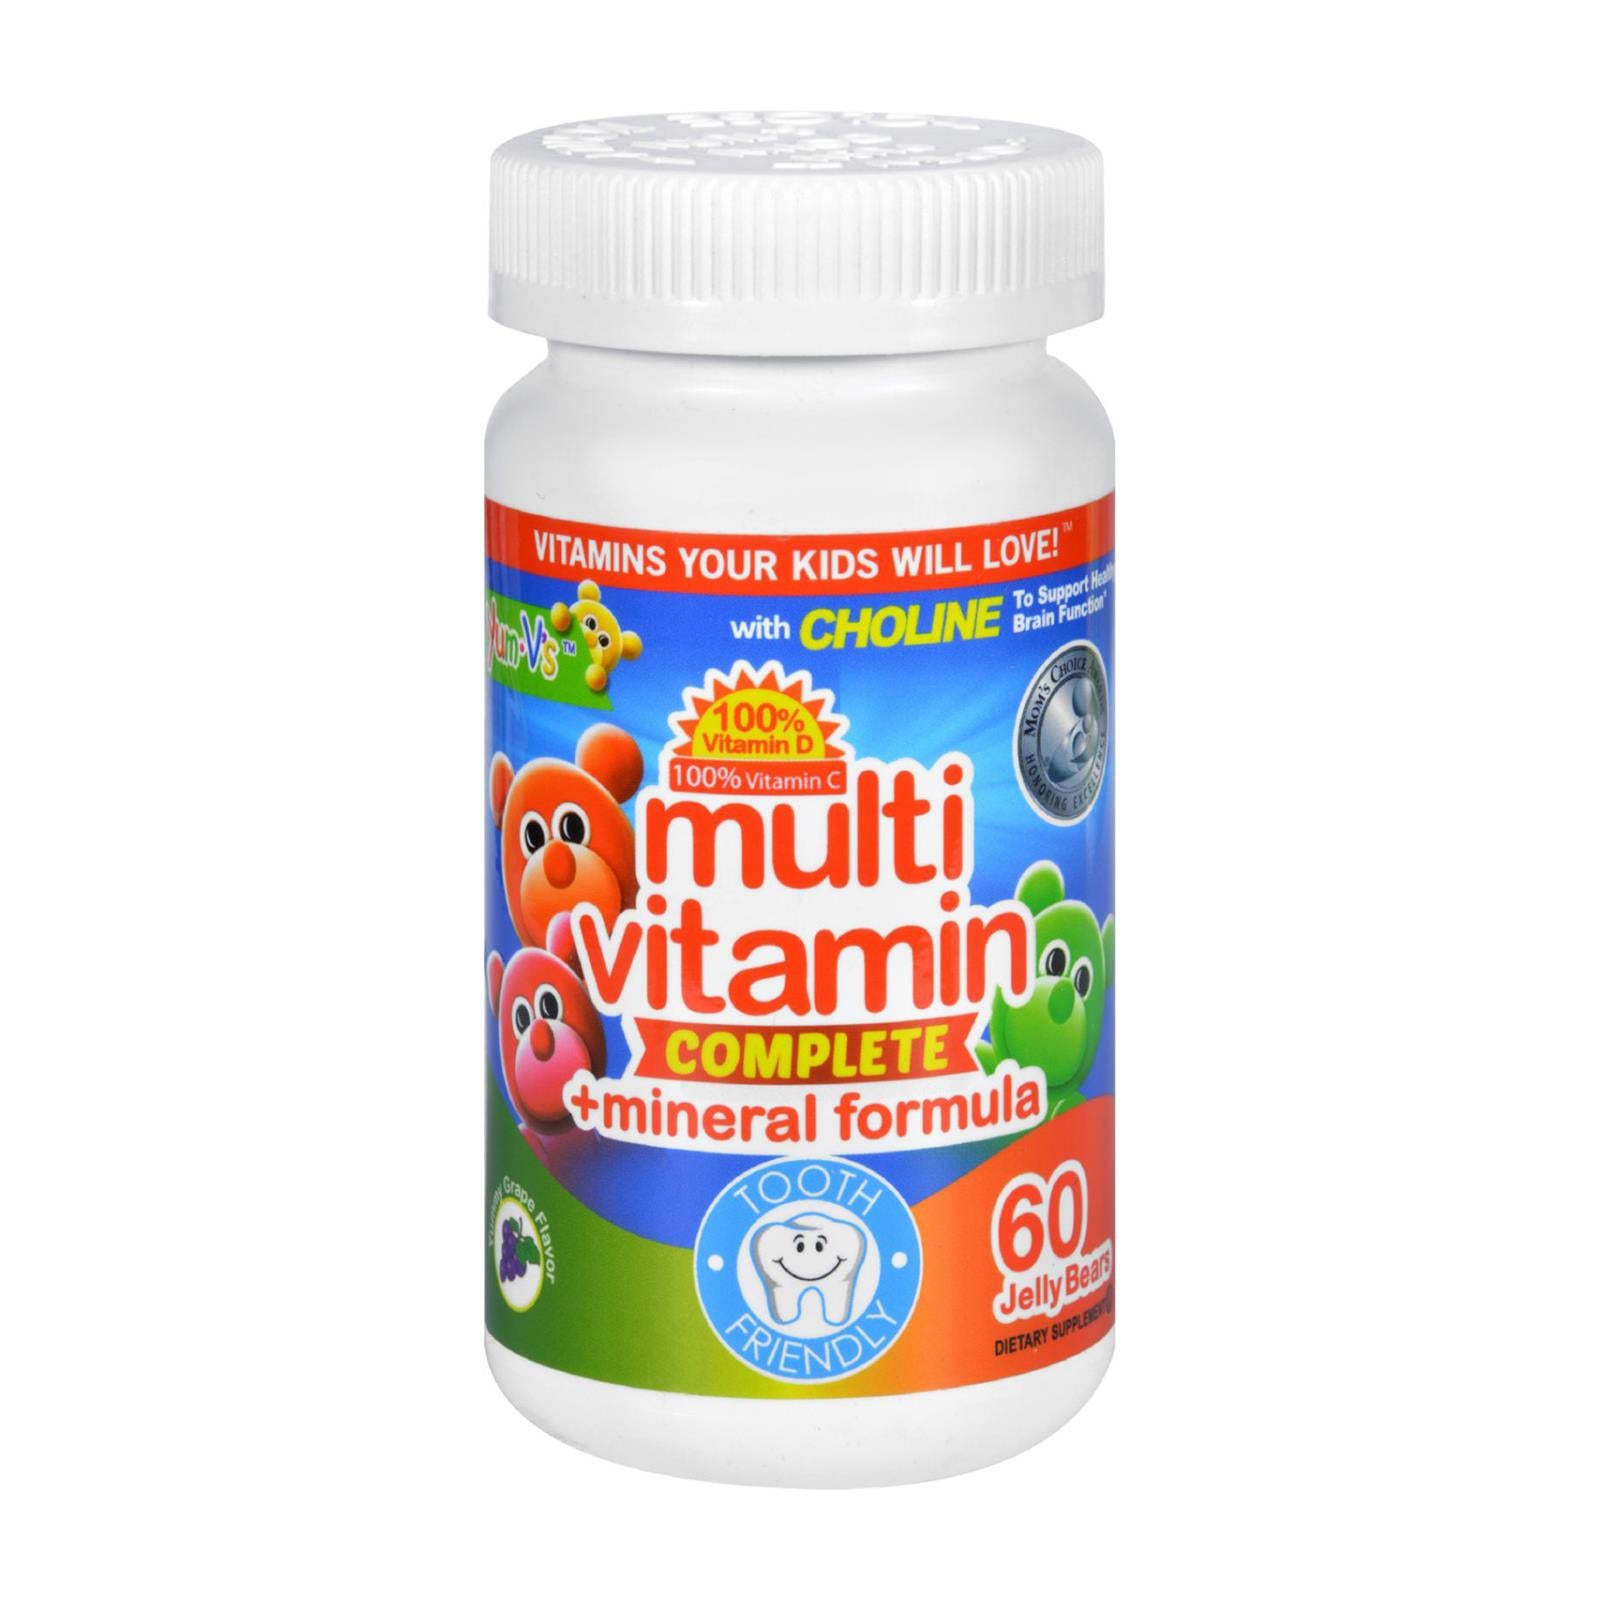 Yum V's Multi Vitamin Plus Mineral Formula Jellies Yummy Grape - 60 Chewables